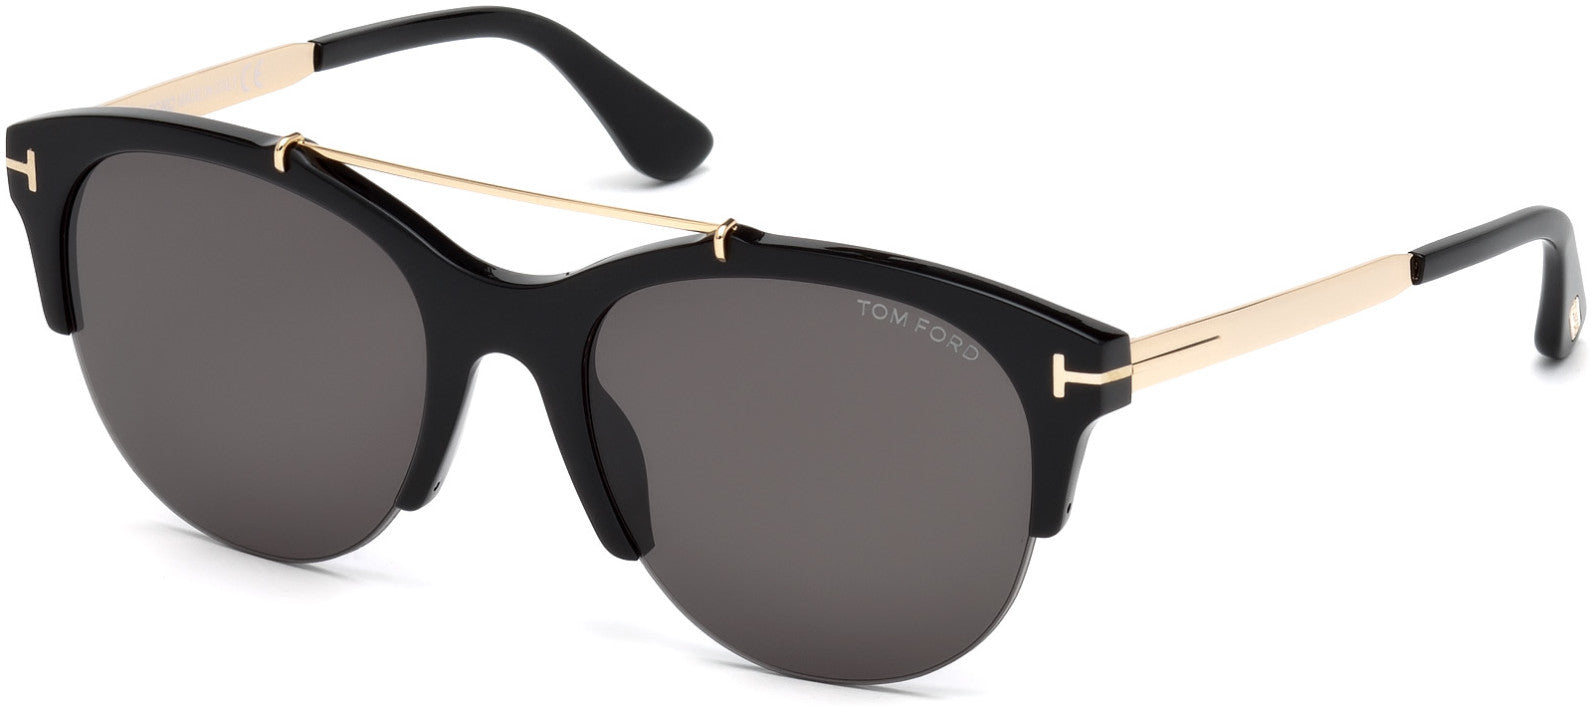 Tom Ford FT0517 Adrenne Geometric Sunglasses 01A-01A - Shiny Black  / Smoke